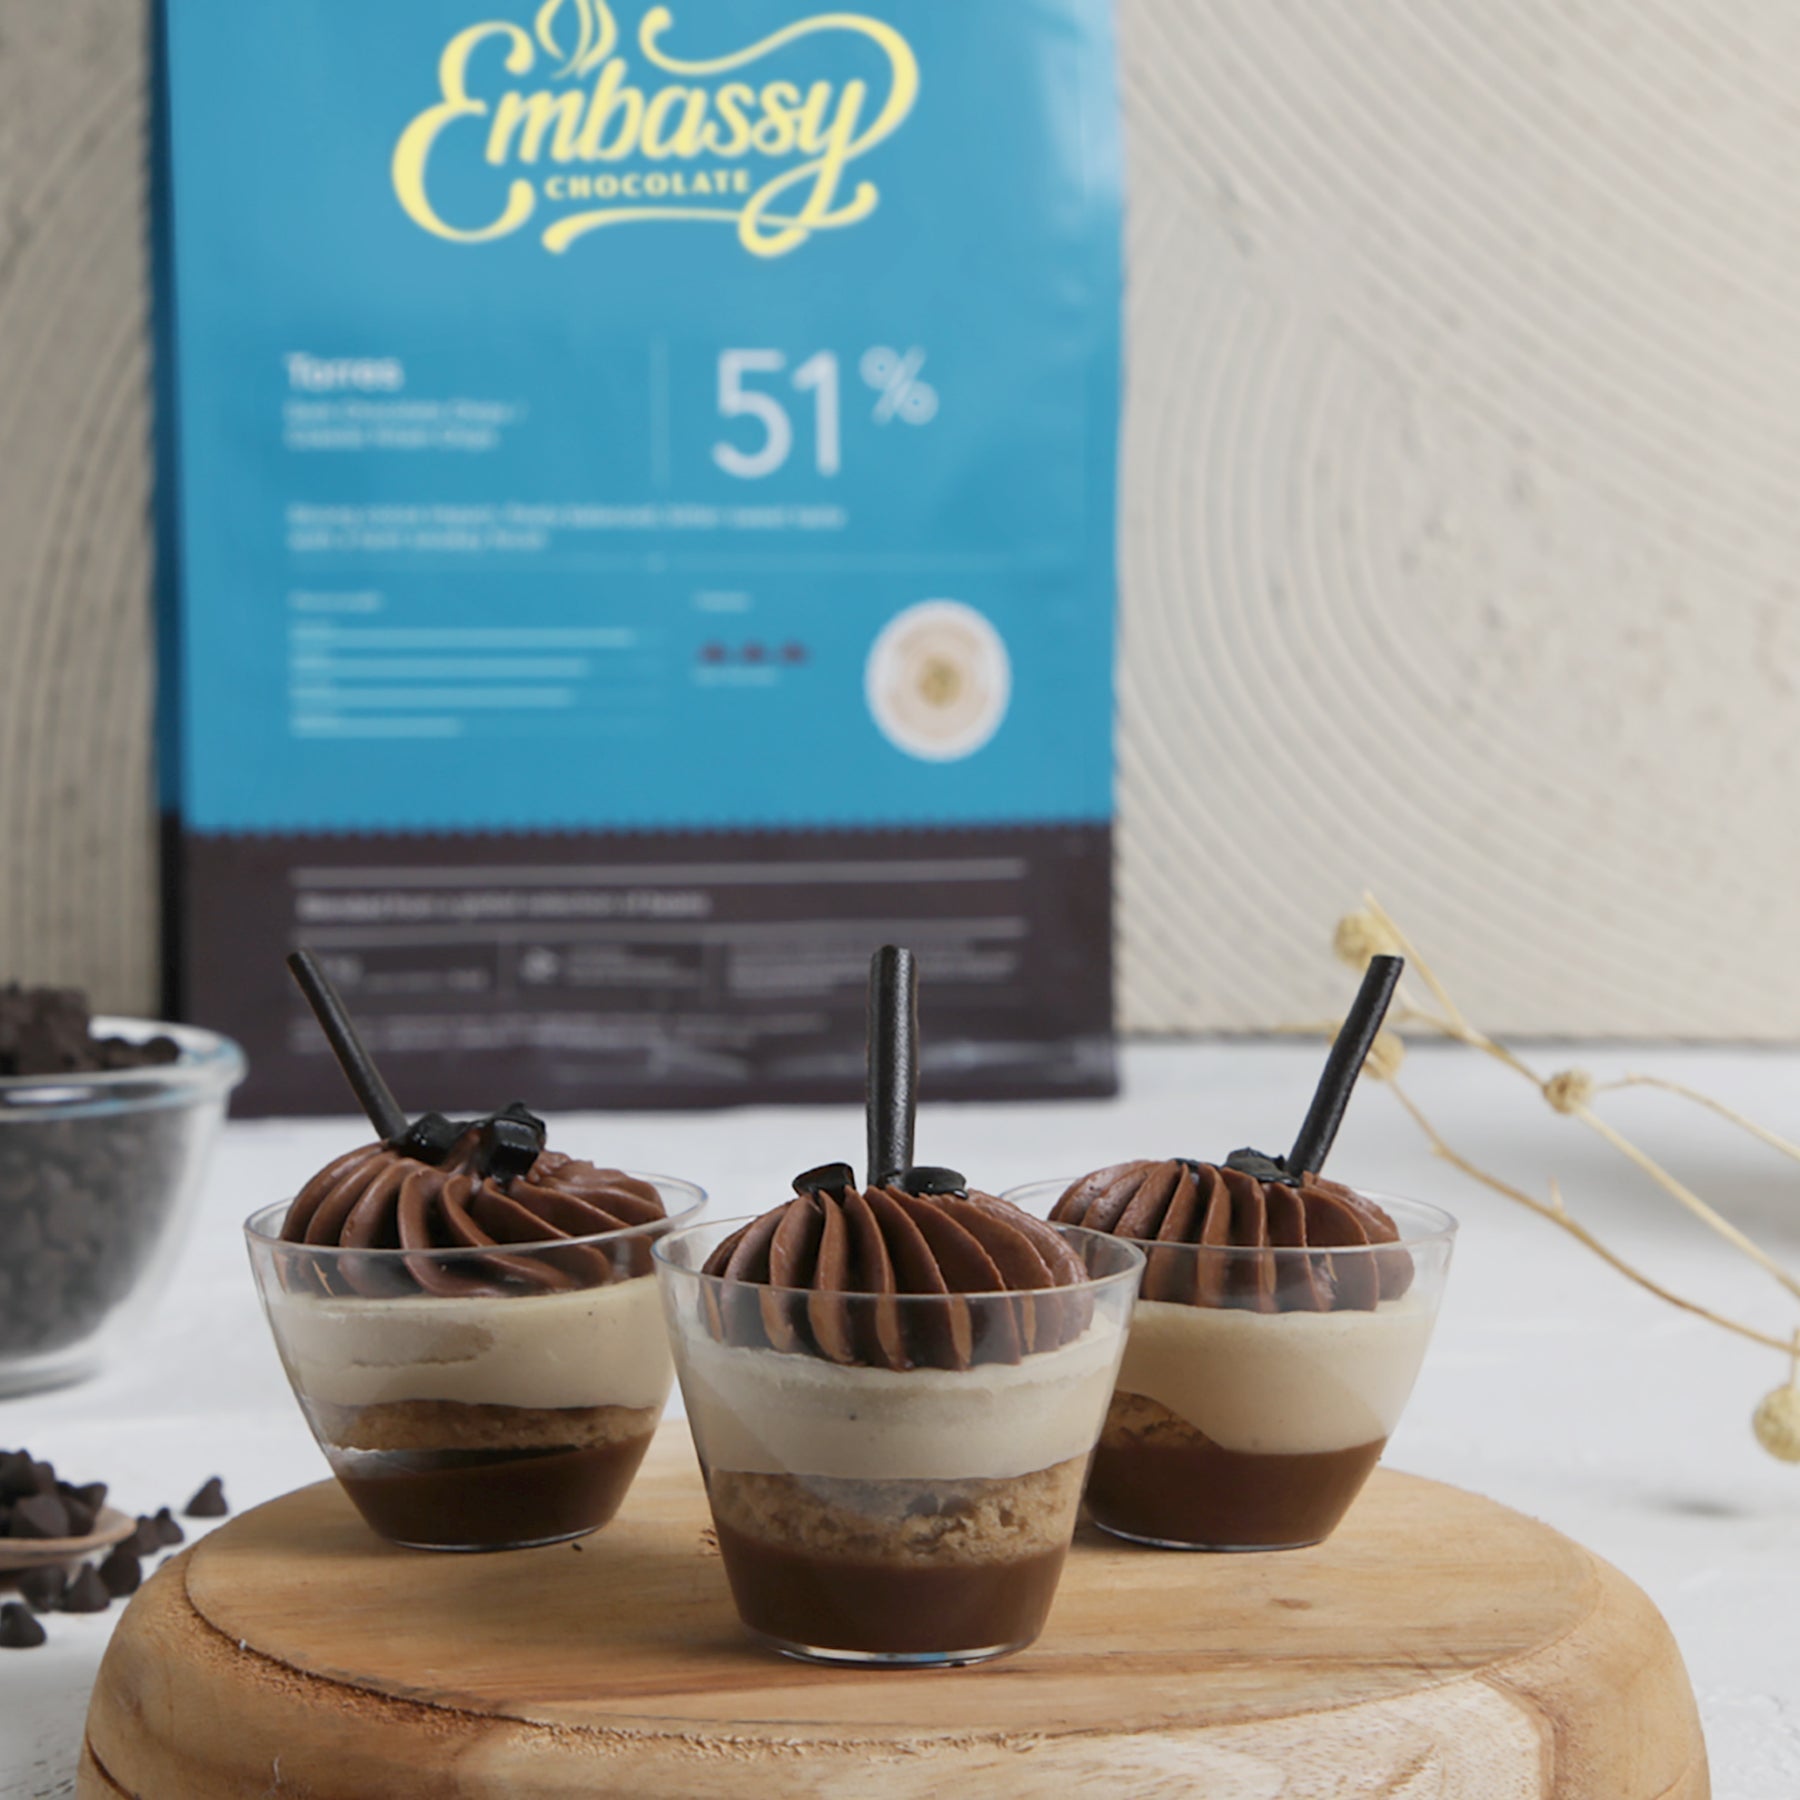 Embassy Torres | Cokelat Hitam Chips